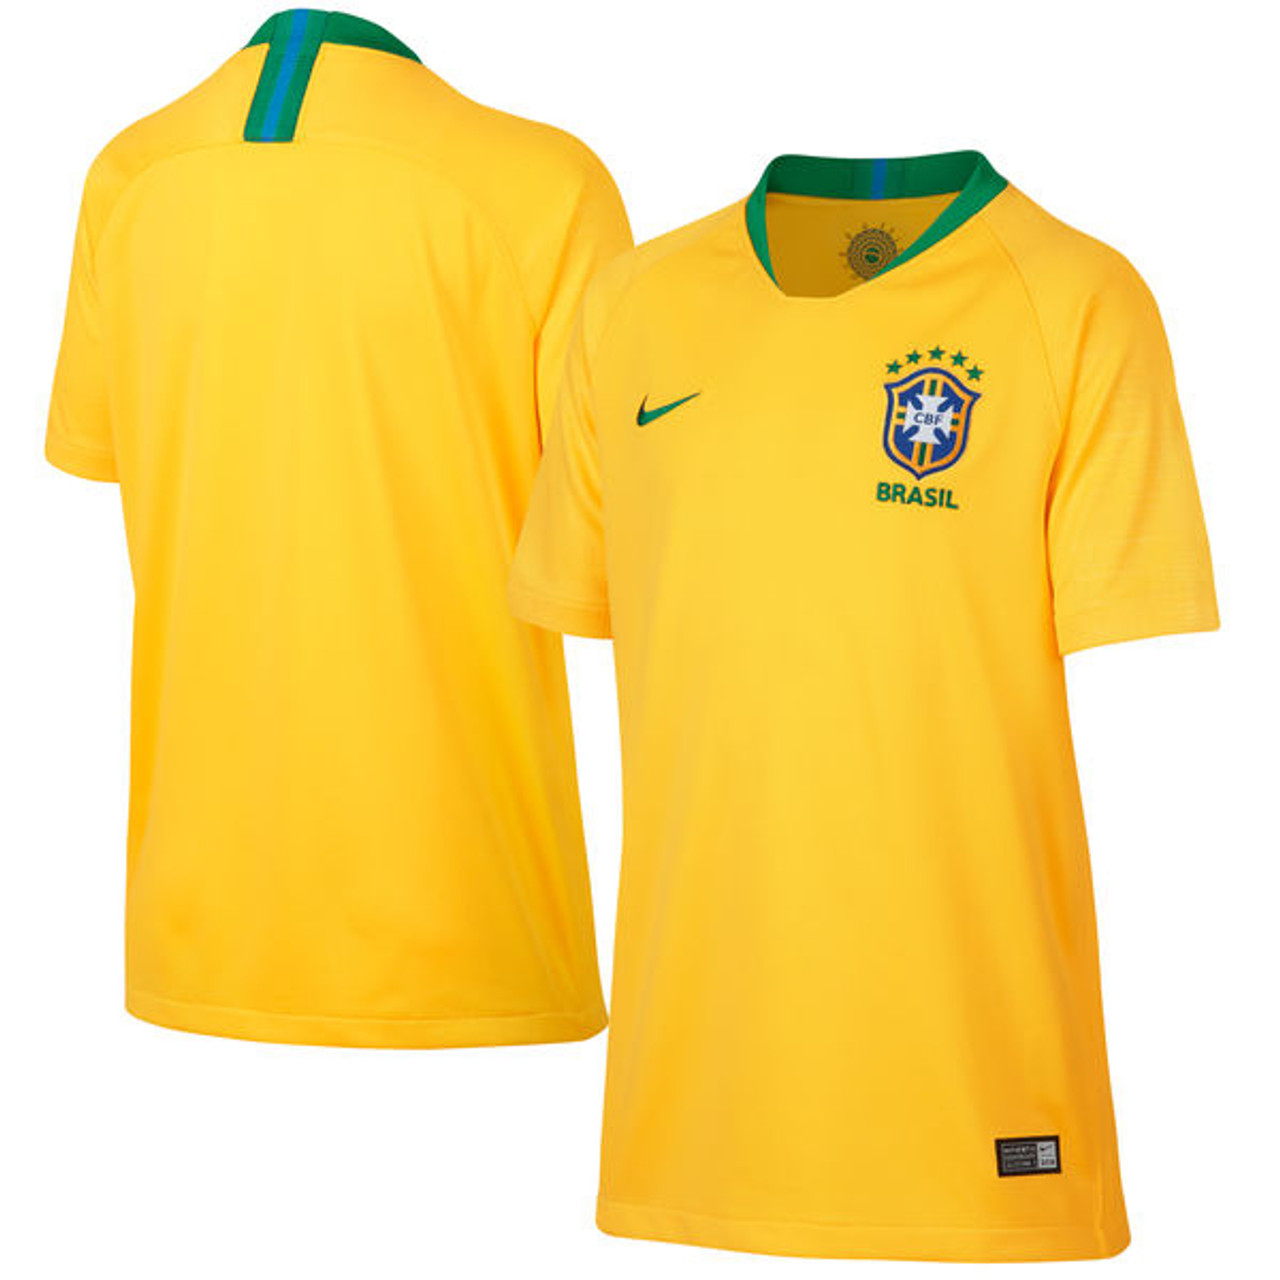 NIKE BRAZIL 2018 HOME JERSEY - Soccer Plus